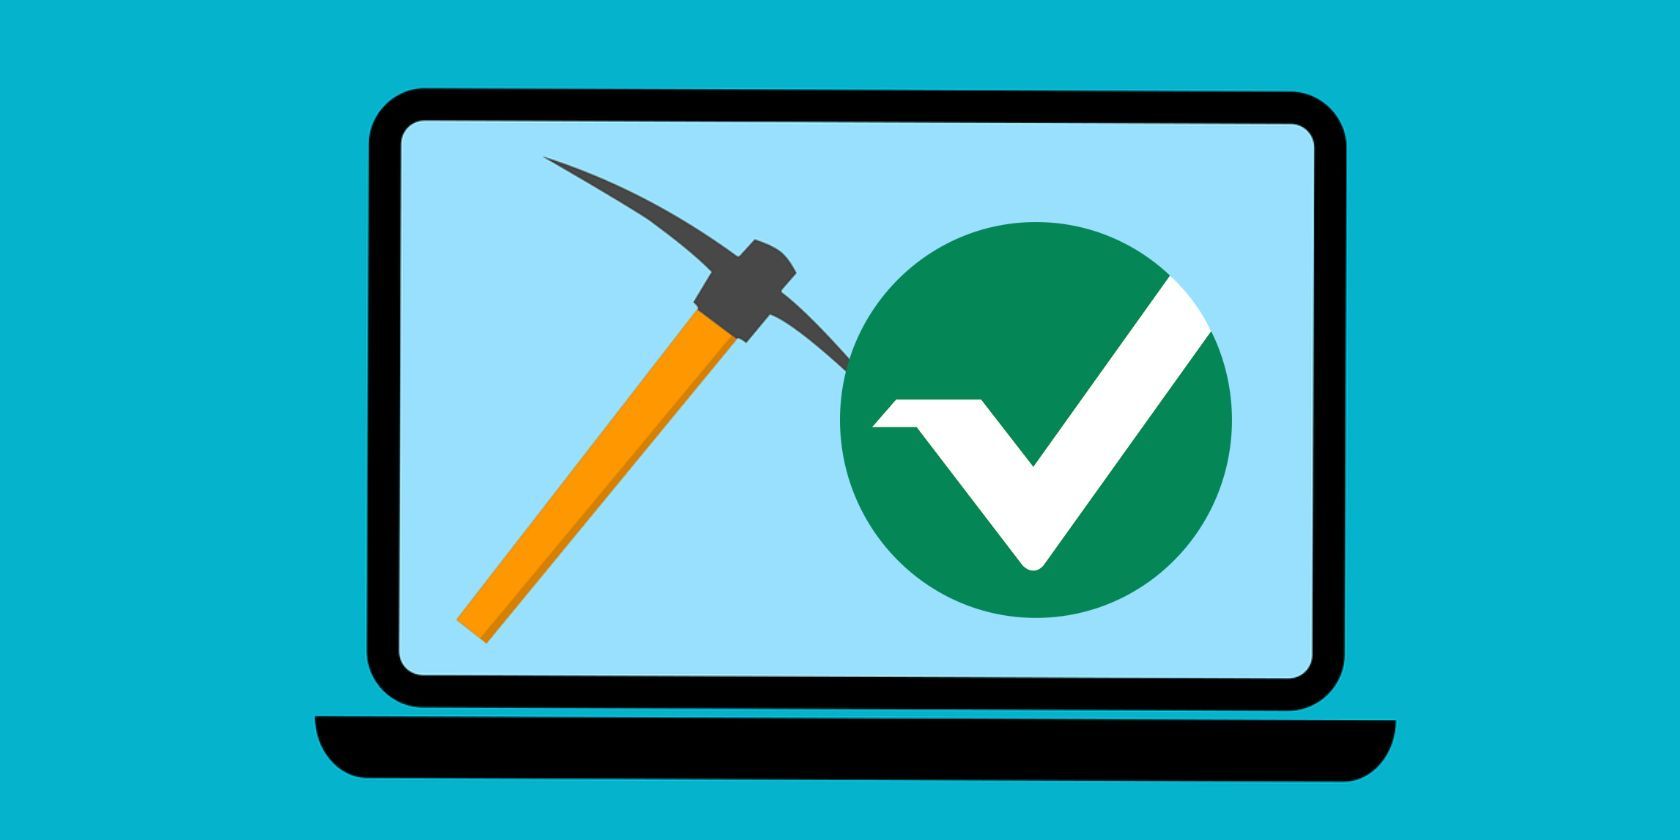 vertcoin mining logo and pick axe symbol on laptop screen